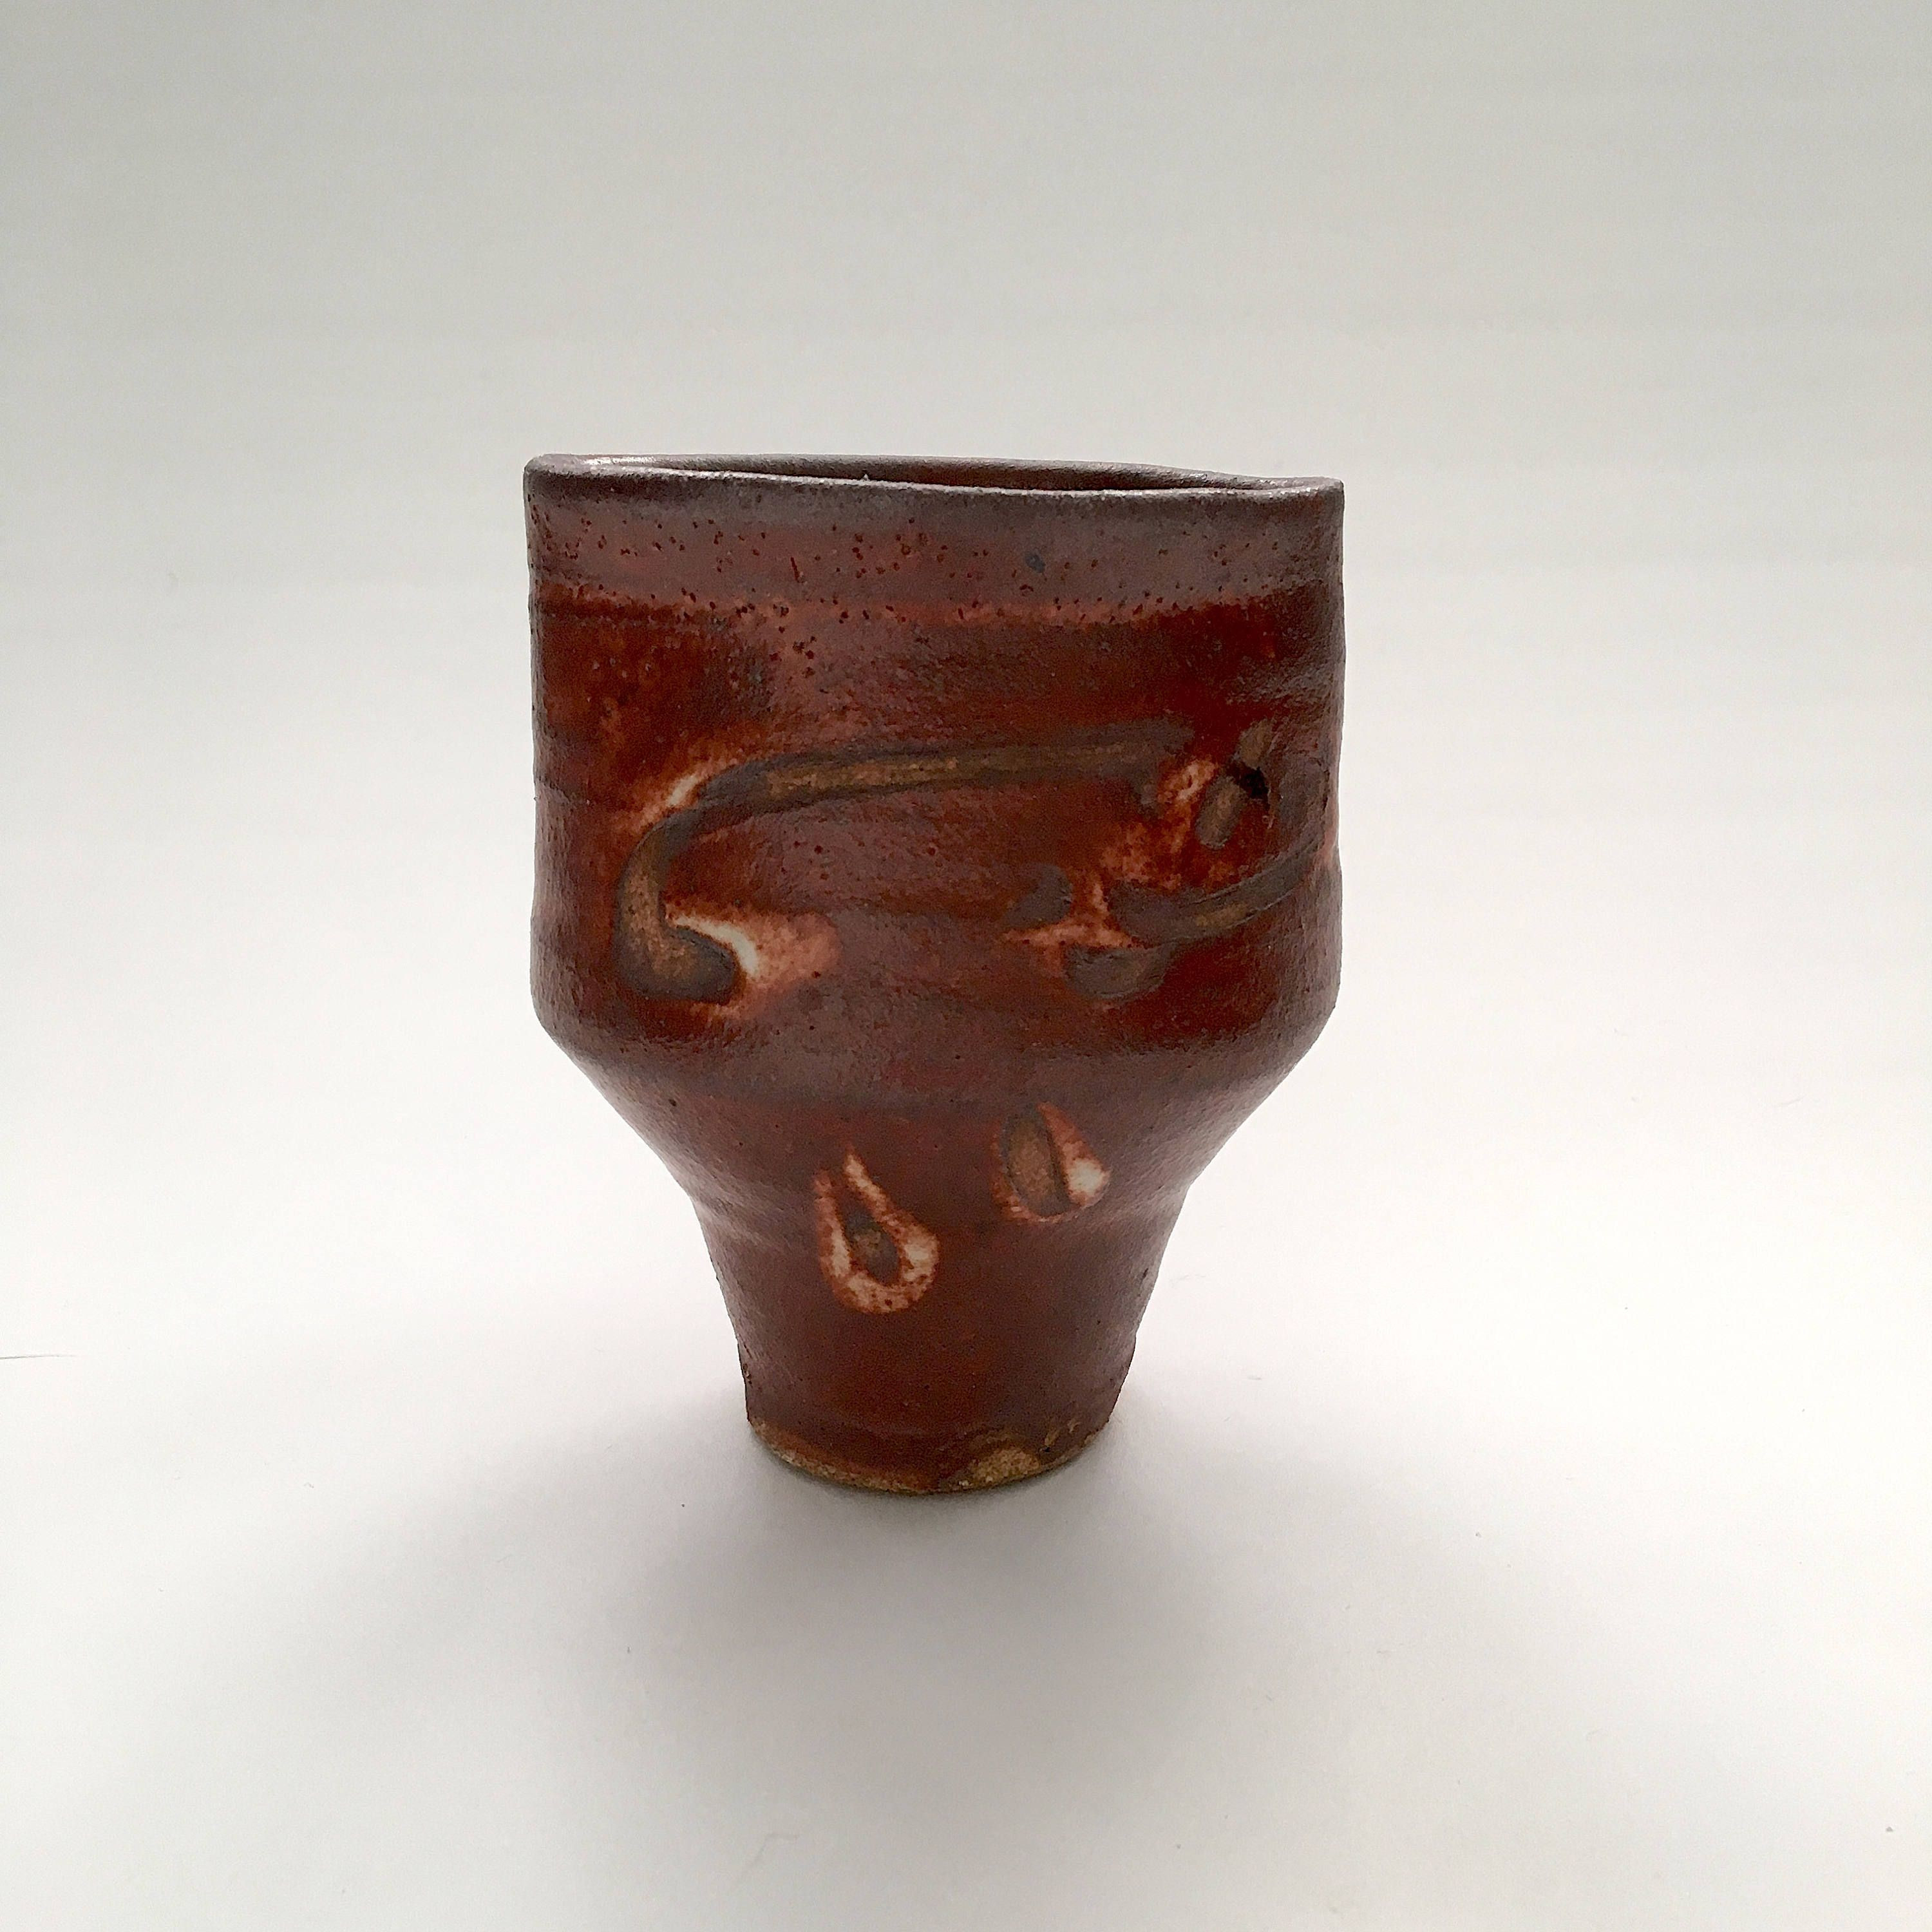 27 Lovely Van Briggle Vase Shapes 2024 free download van briggle vase shapes of small rust colored stoneware art pottery vase by artizmo on etsy inside small rust colored stoneware art pottery vase